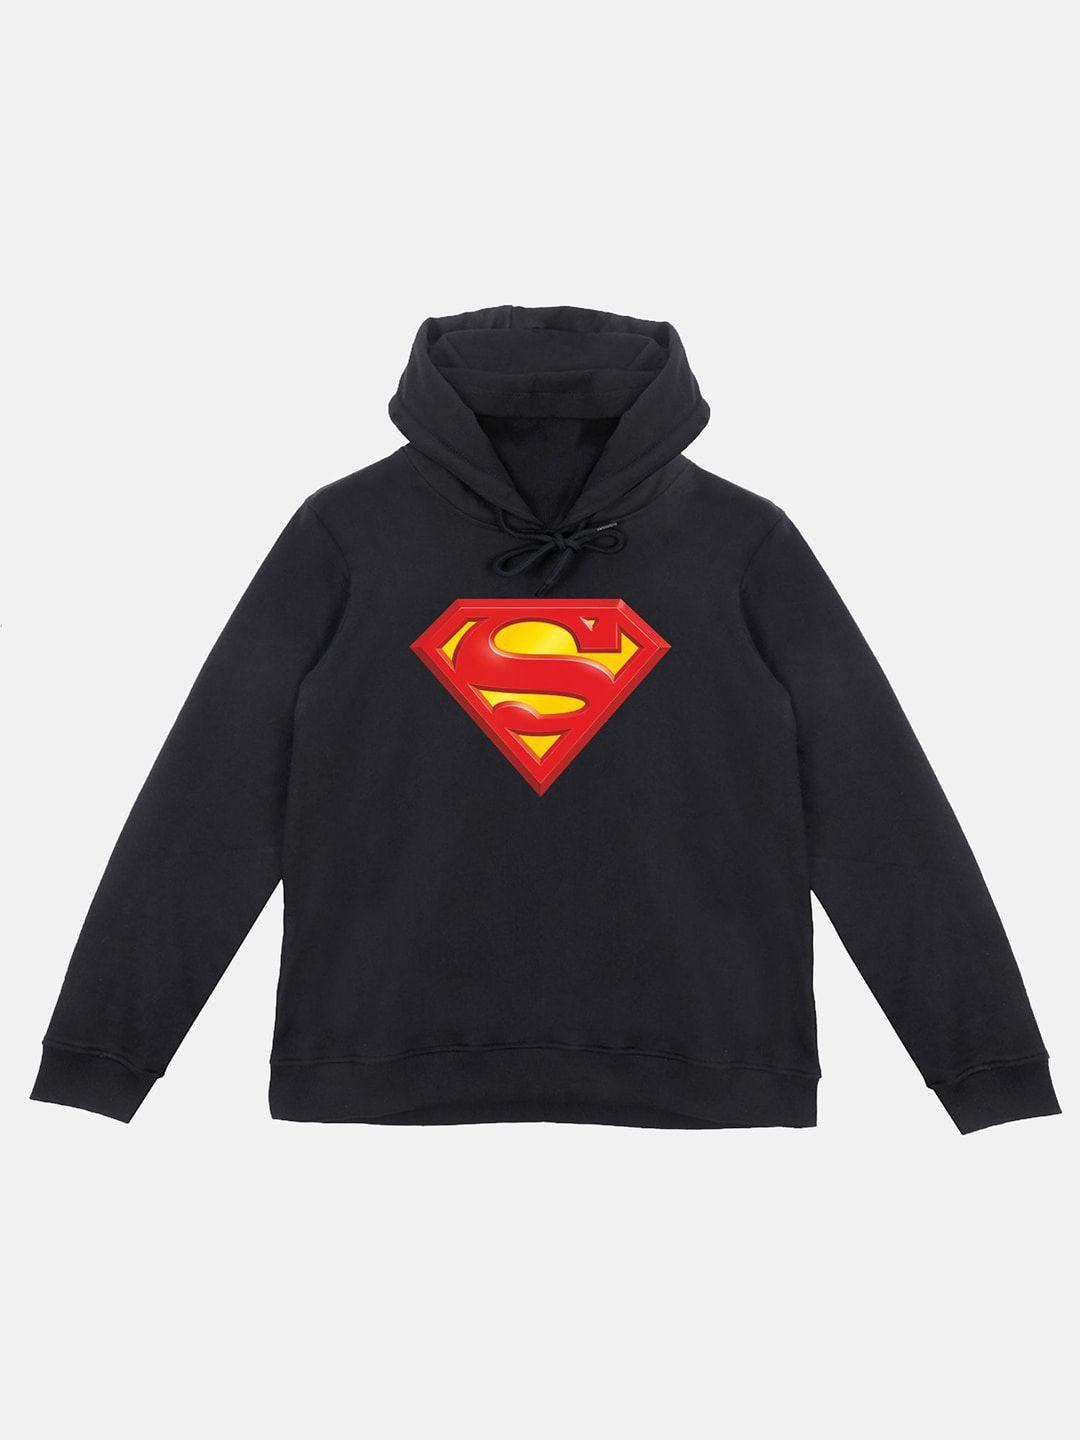 dc by wear your mind kids black printed superman hooded sweatshirt